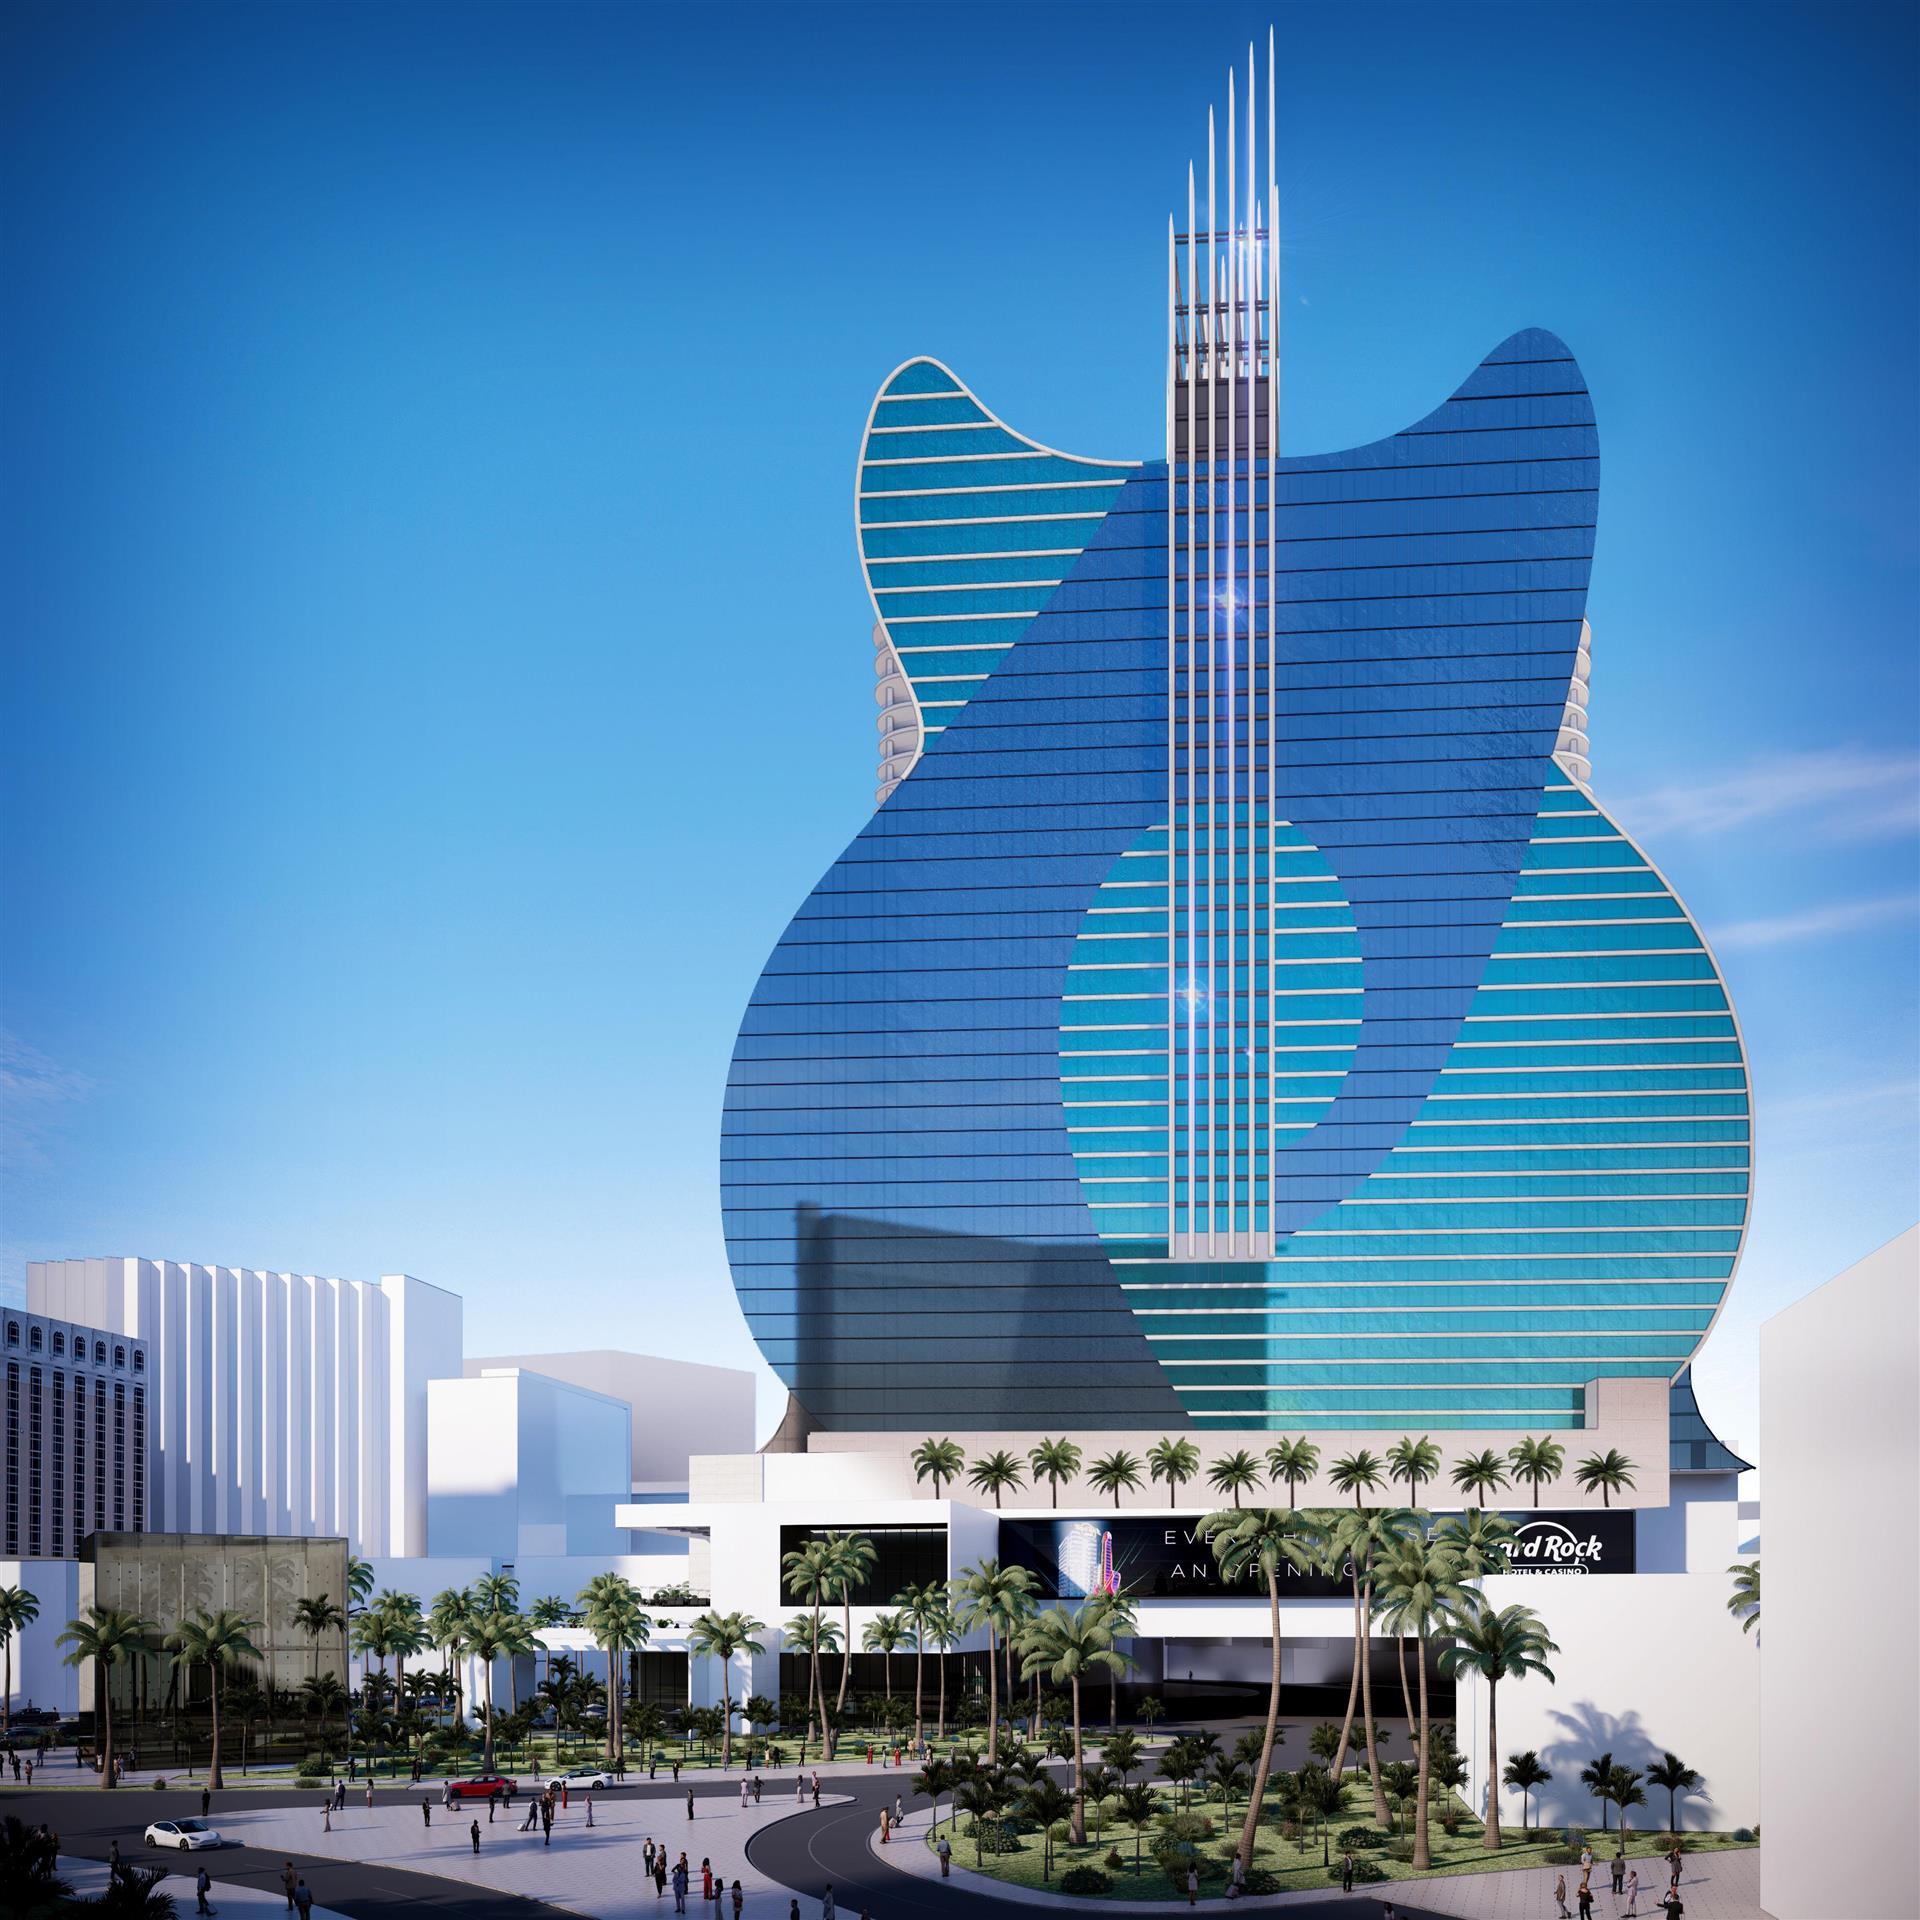 Hard Rock Las Vegas (formally The Mirage) in Las Vegas, NV